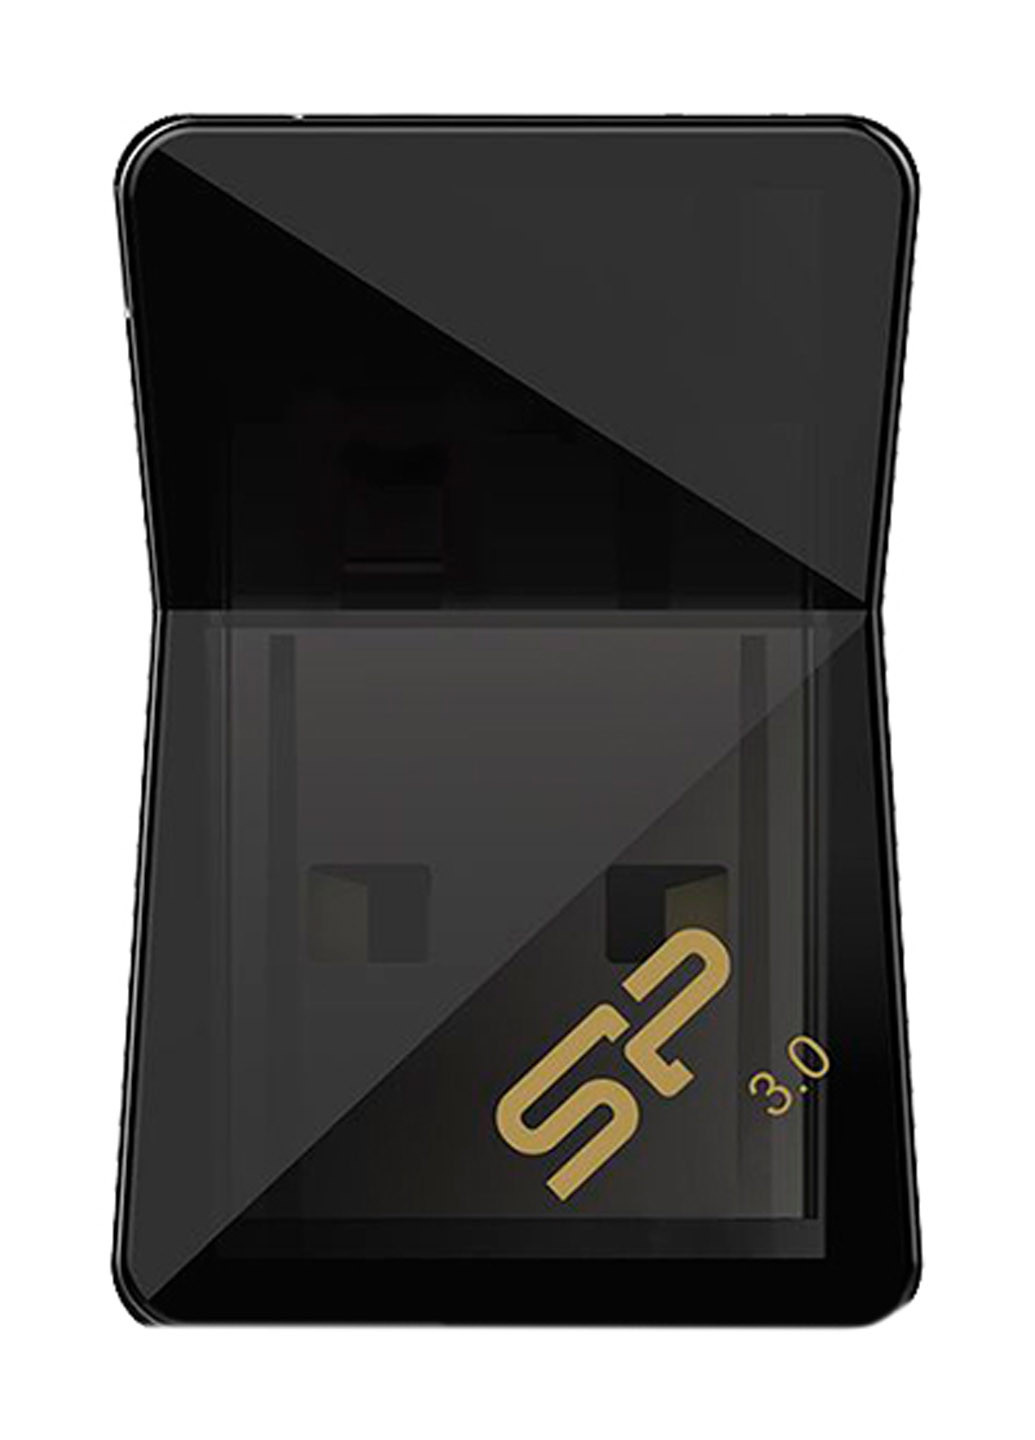 Флеш пам'ять USB Jewel J08 32GB Black (SP032GBUF3J08V1K) Silicon Power флеш память usb silicon power jewel j08 32gb black (sp032gbuf3j08v1k) (132007742)